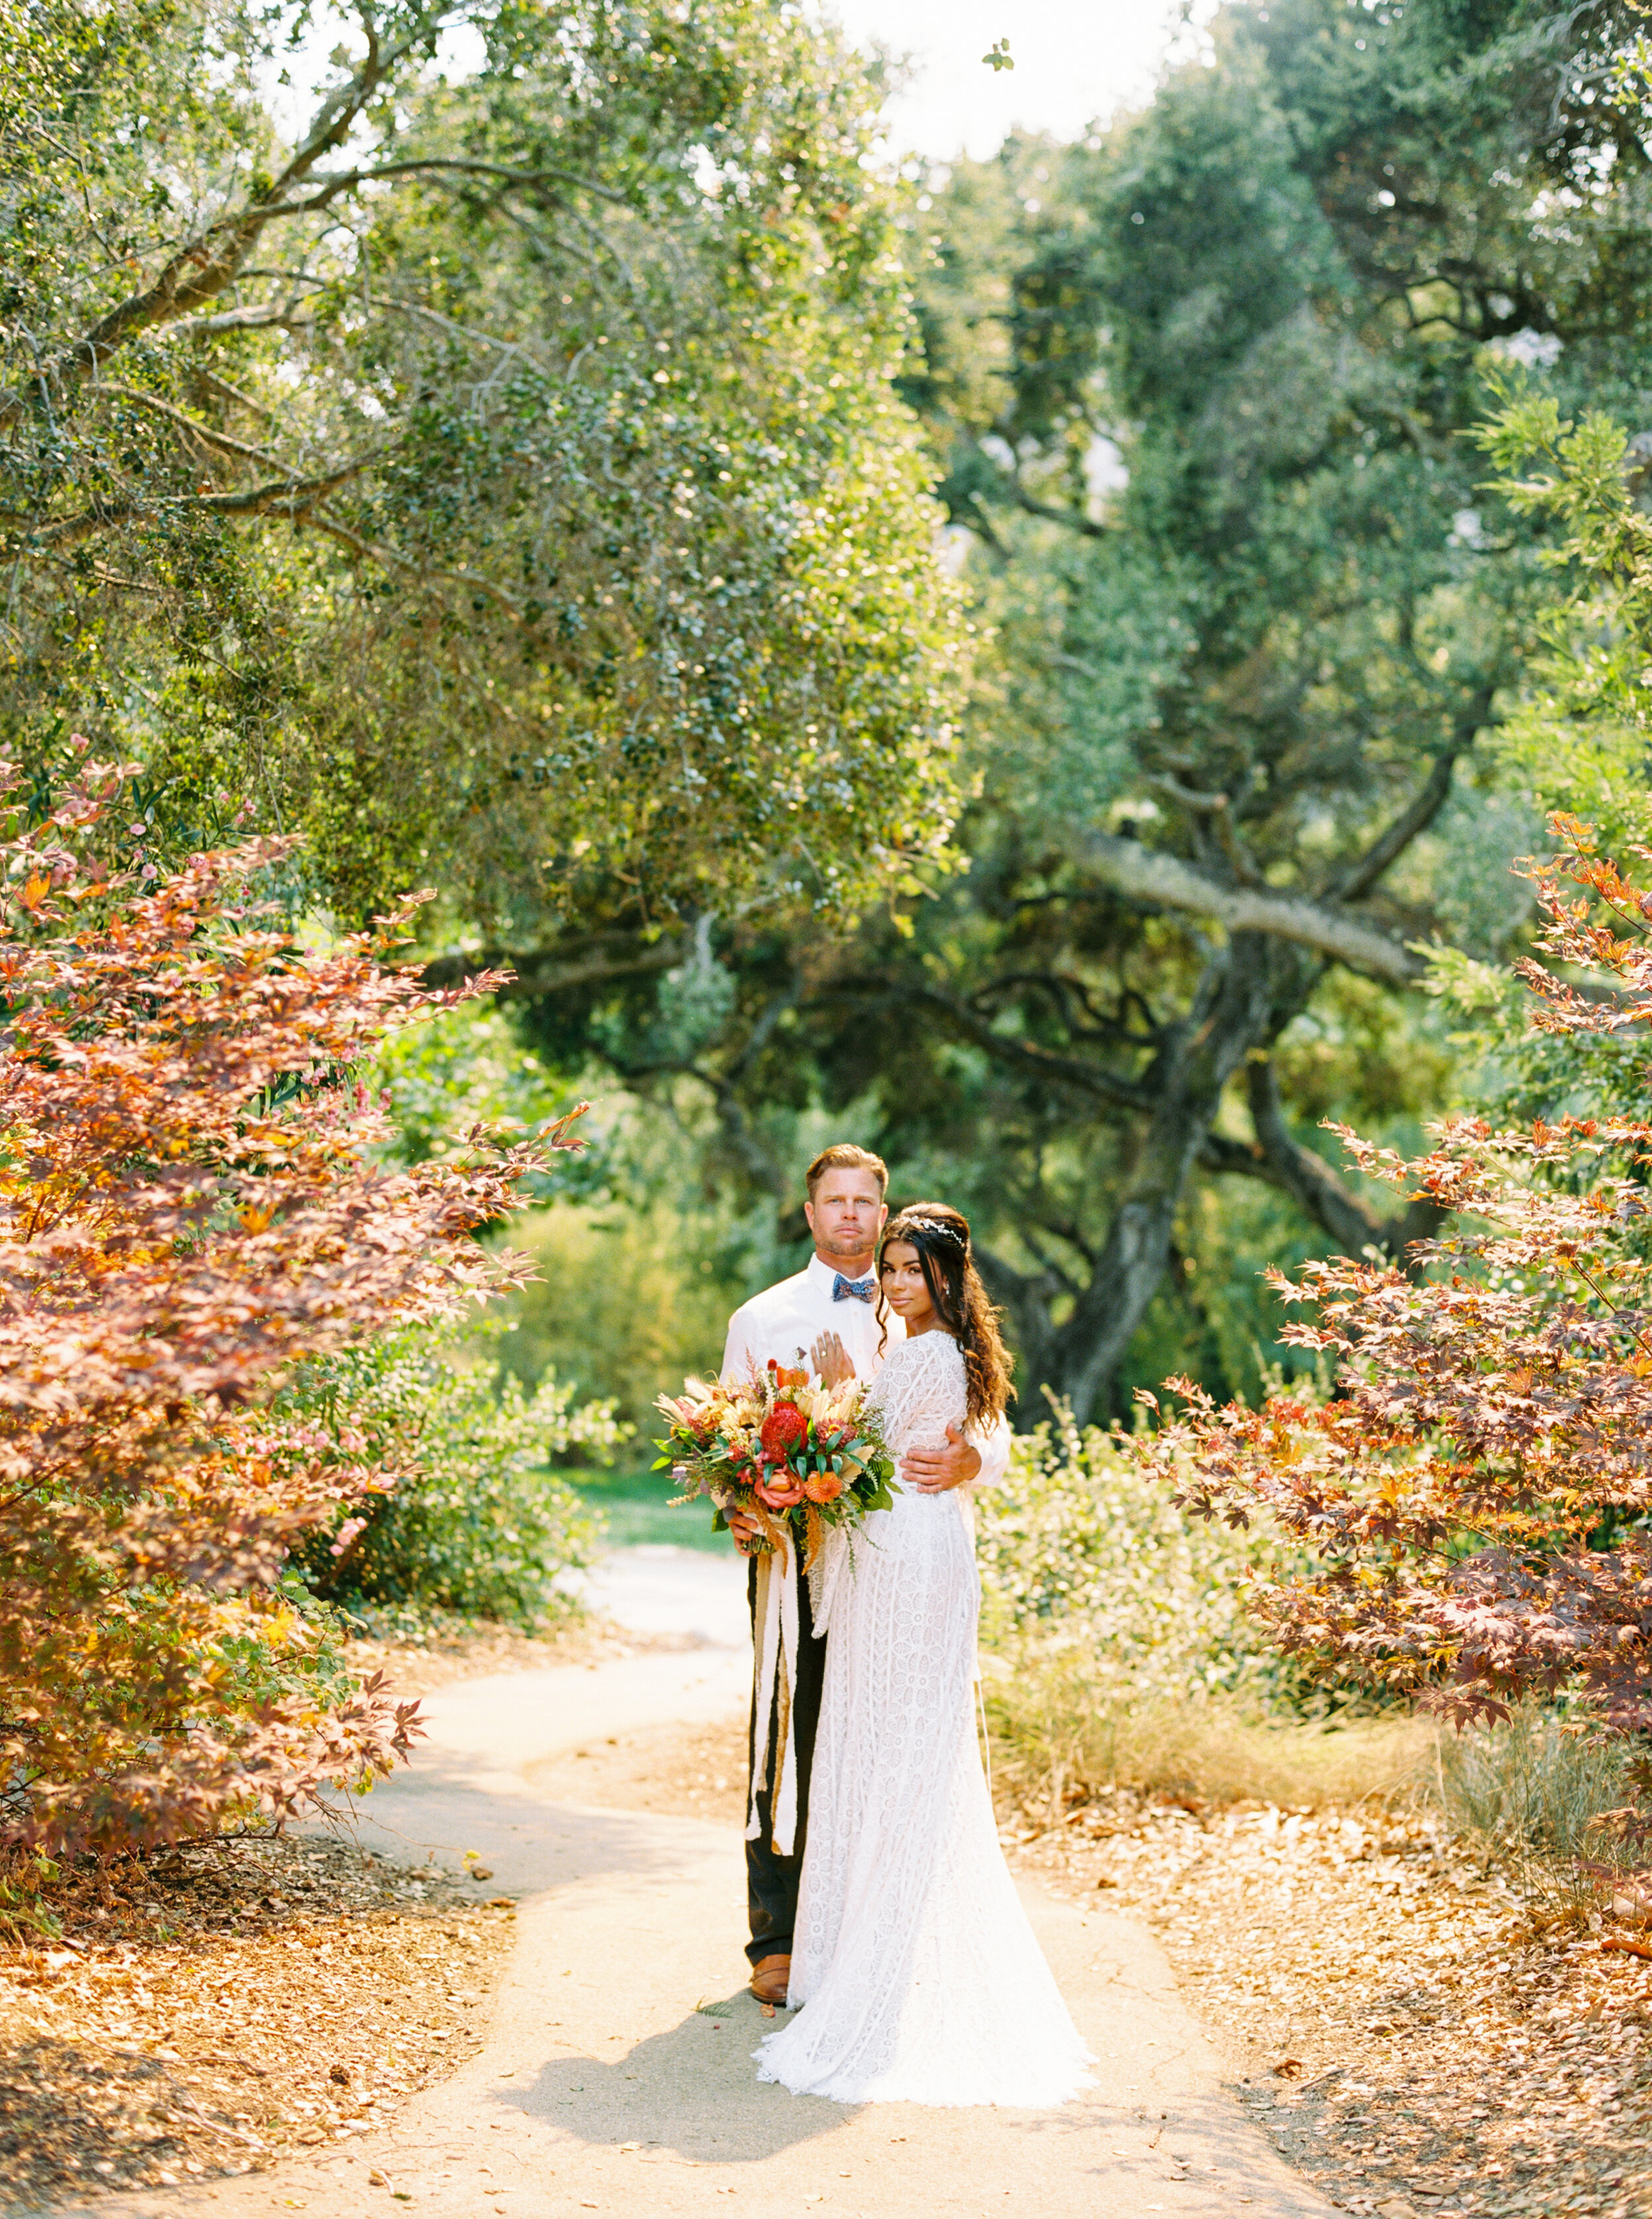 Sarahi Hadden - An Earthy Summer Boho Inspired Wedding with Sunset Hues at Gardener Ranch-6.jpg